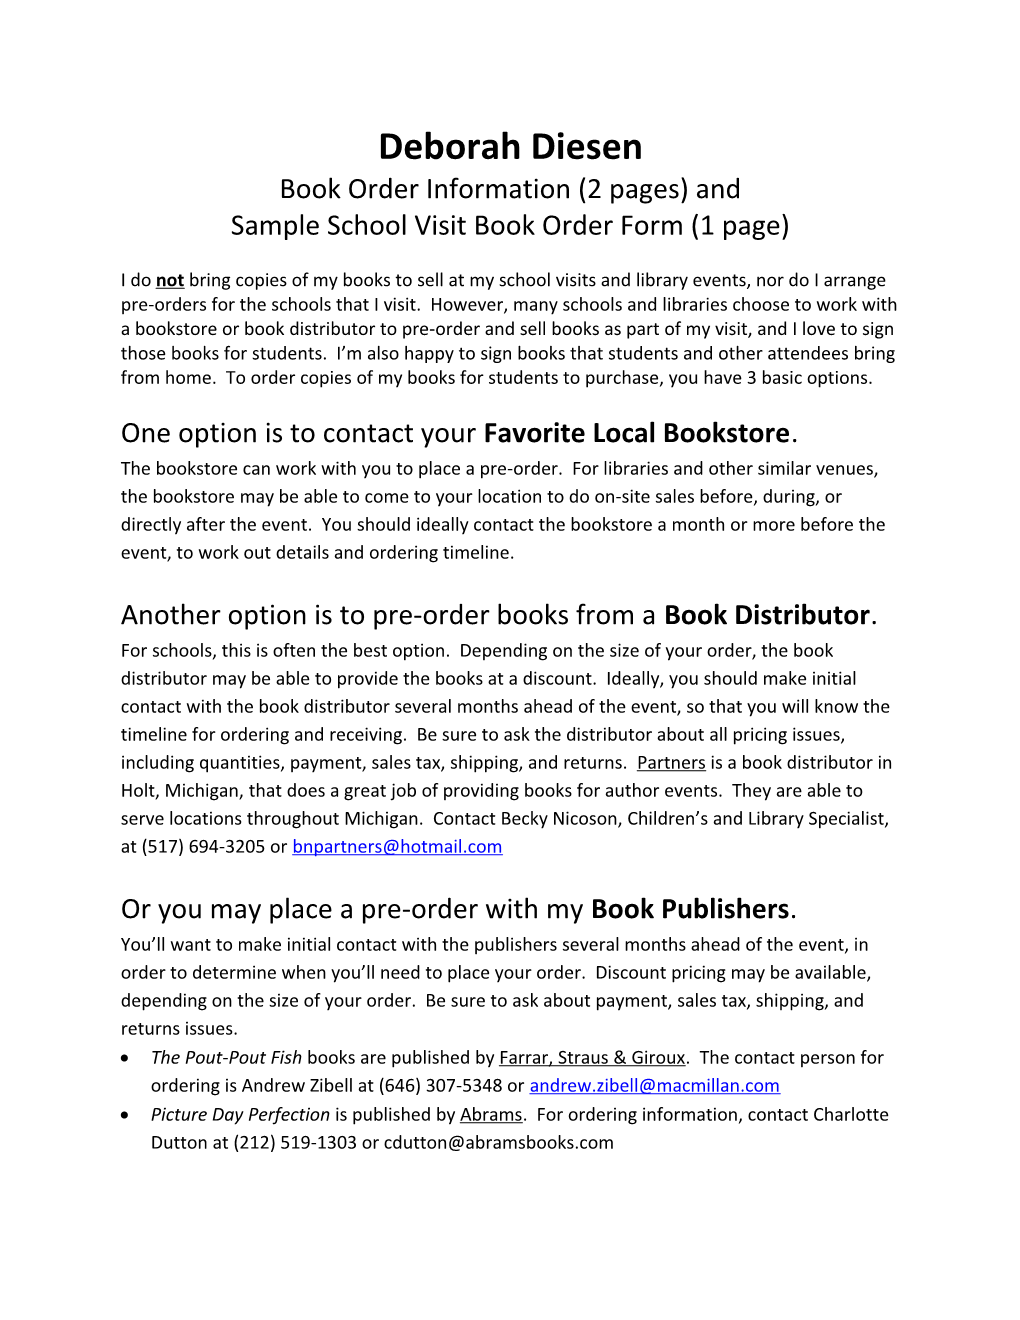 Sample School Visit Book Order Form (1 Page)